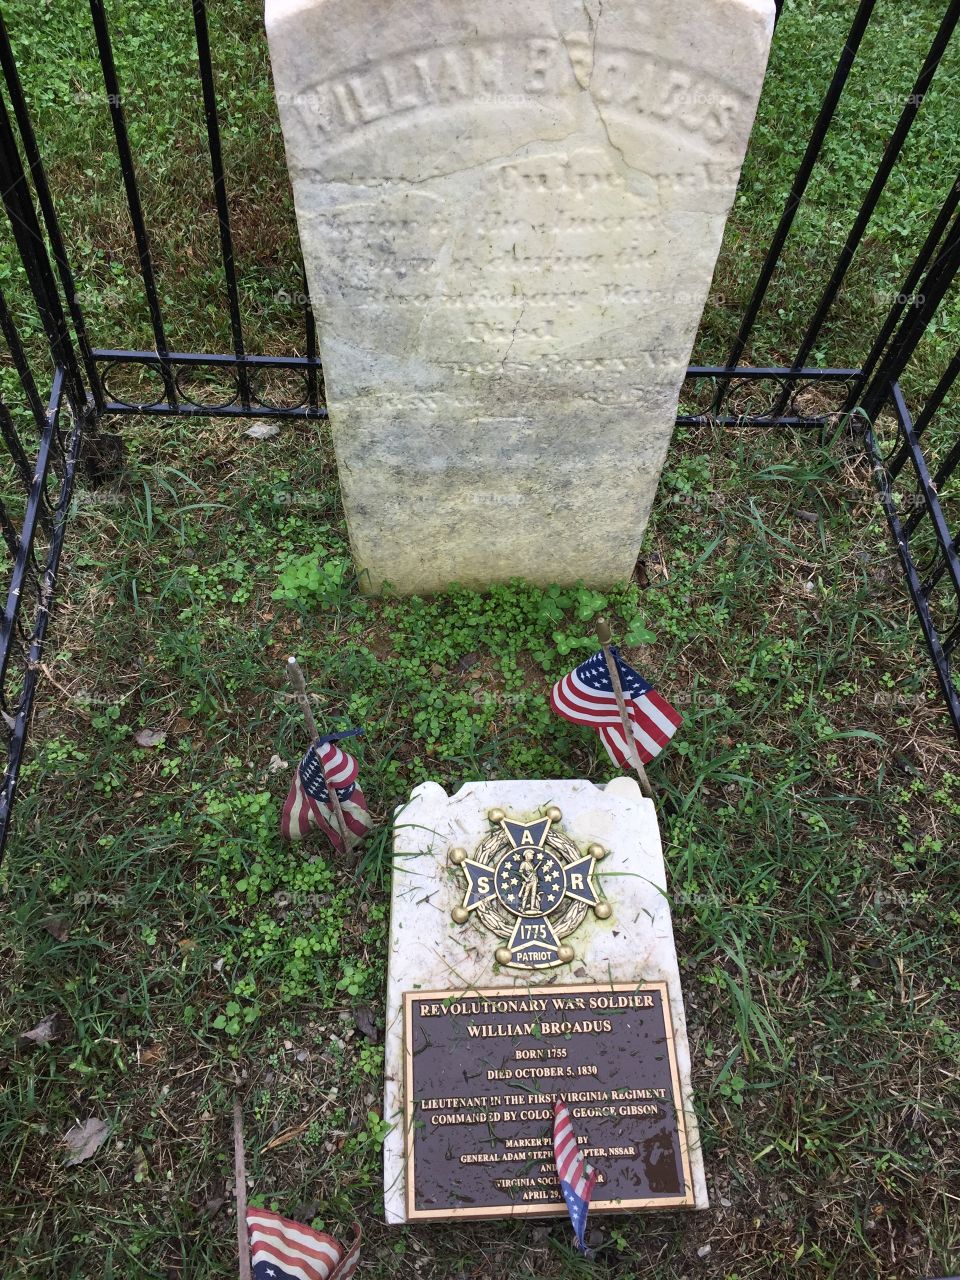 William Broadus Revolutionary War Soldier historic grave site at Harper’s Ferry cemetery. 